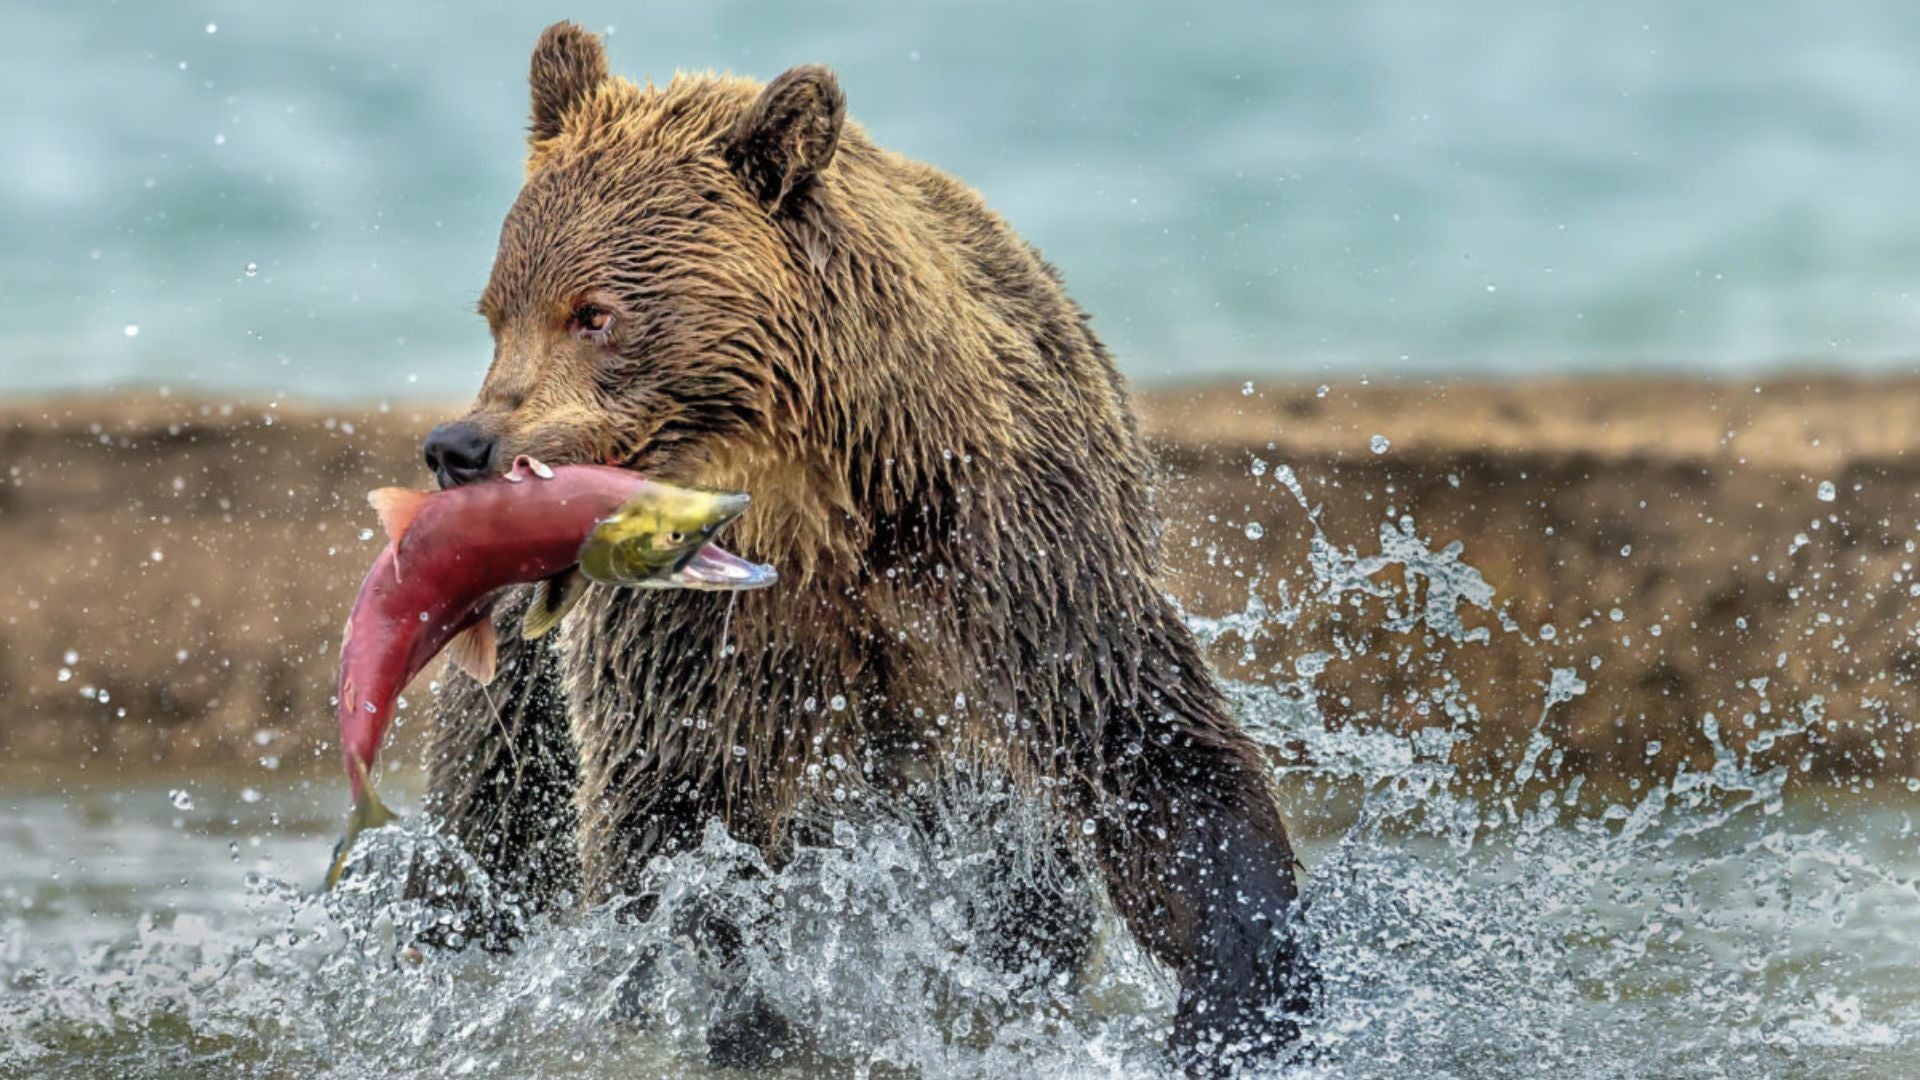 Bear eating fish in water